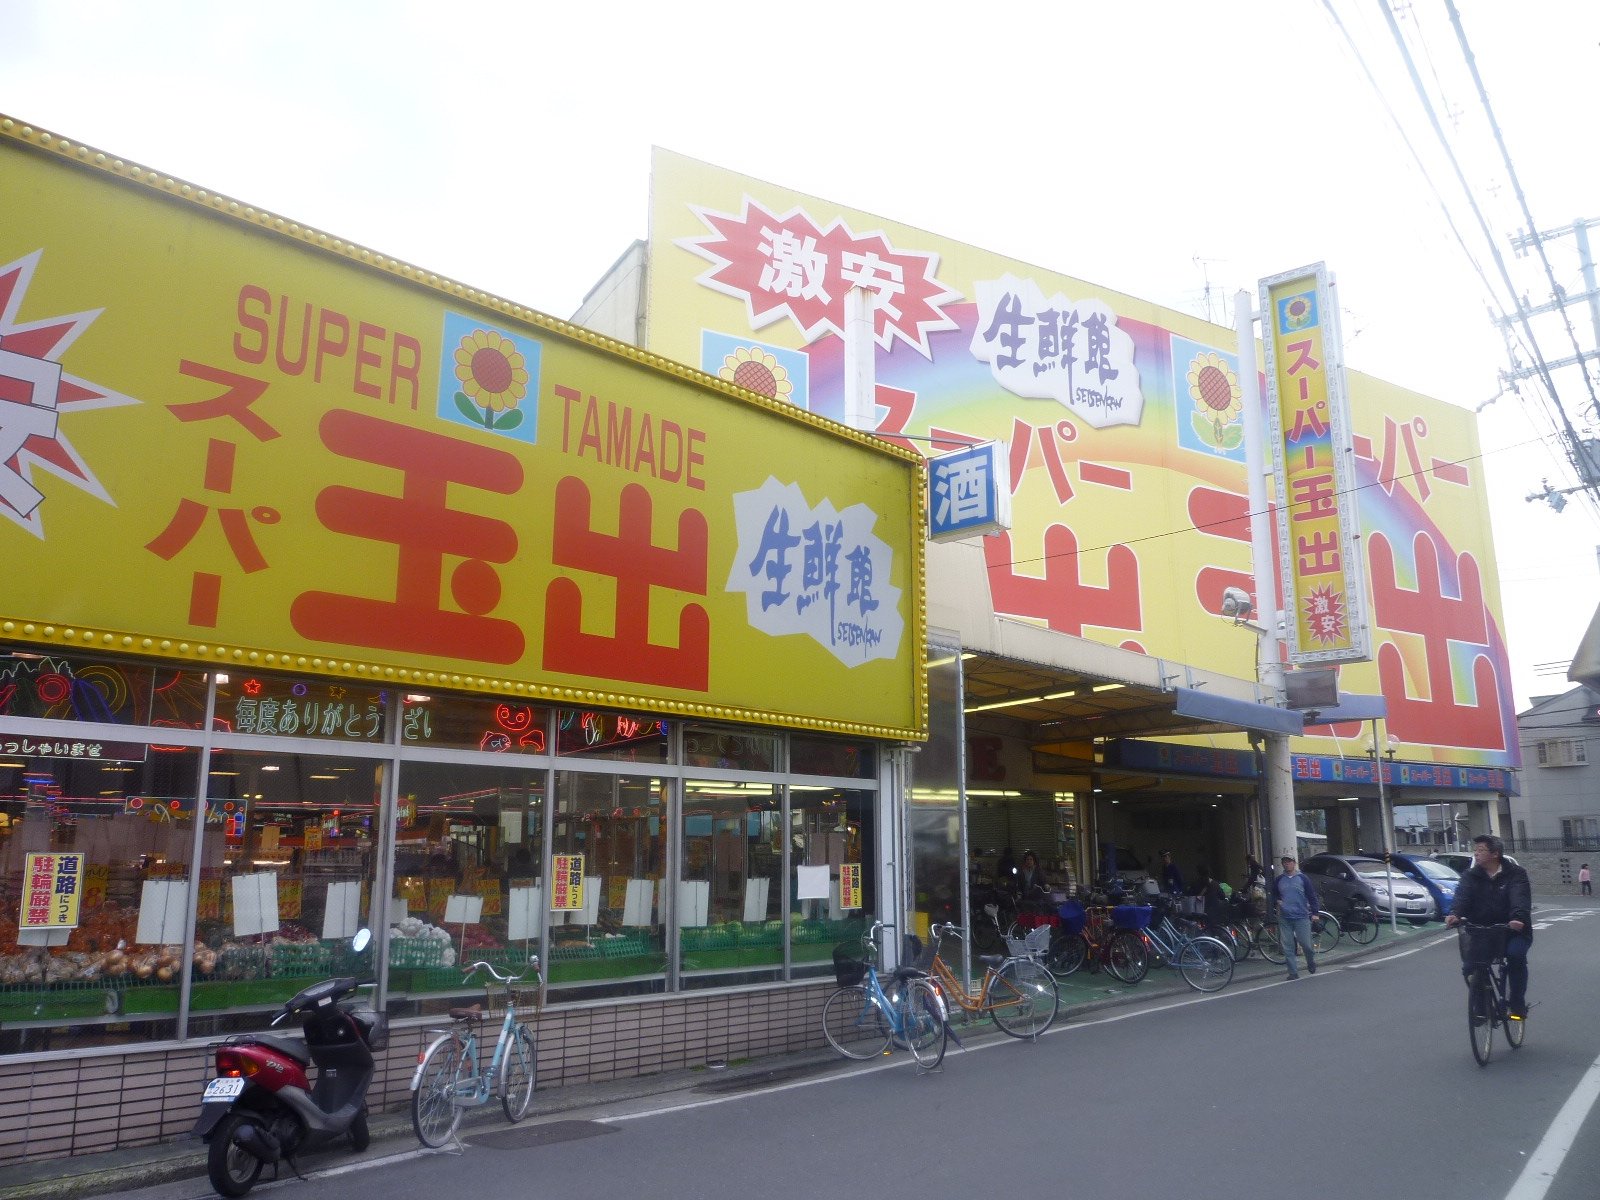 Supermarket. 708m to Super Tamade Yao store (Super)